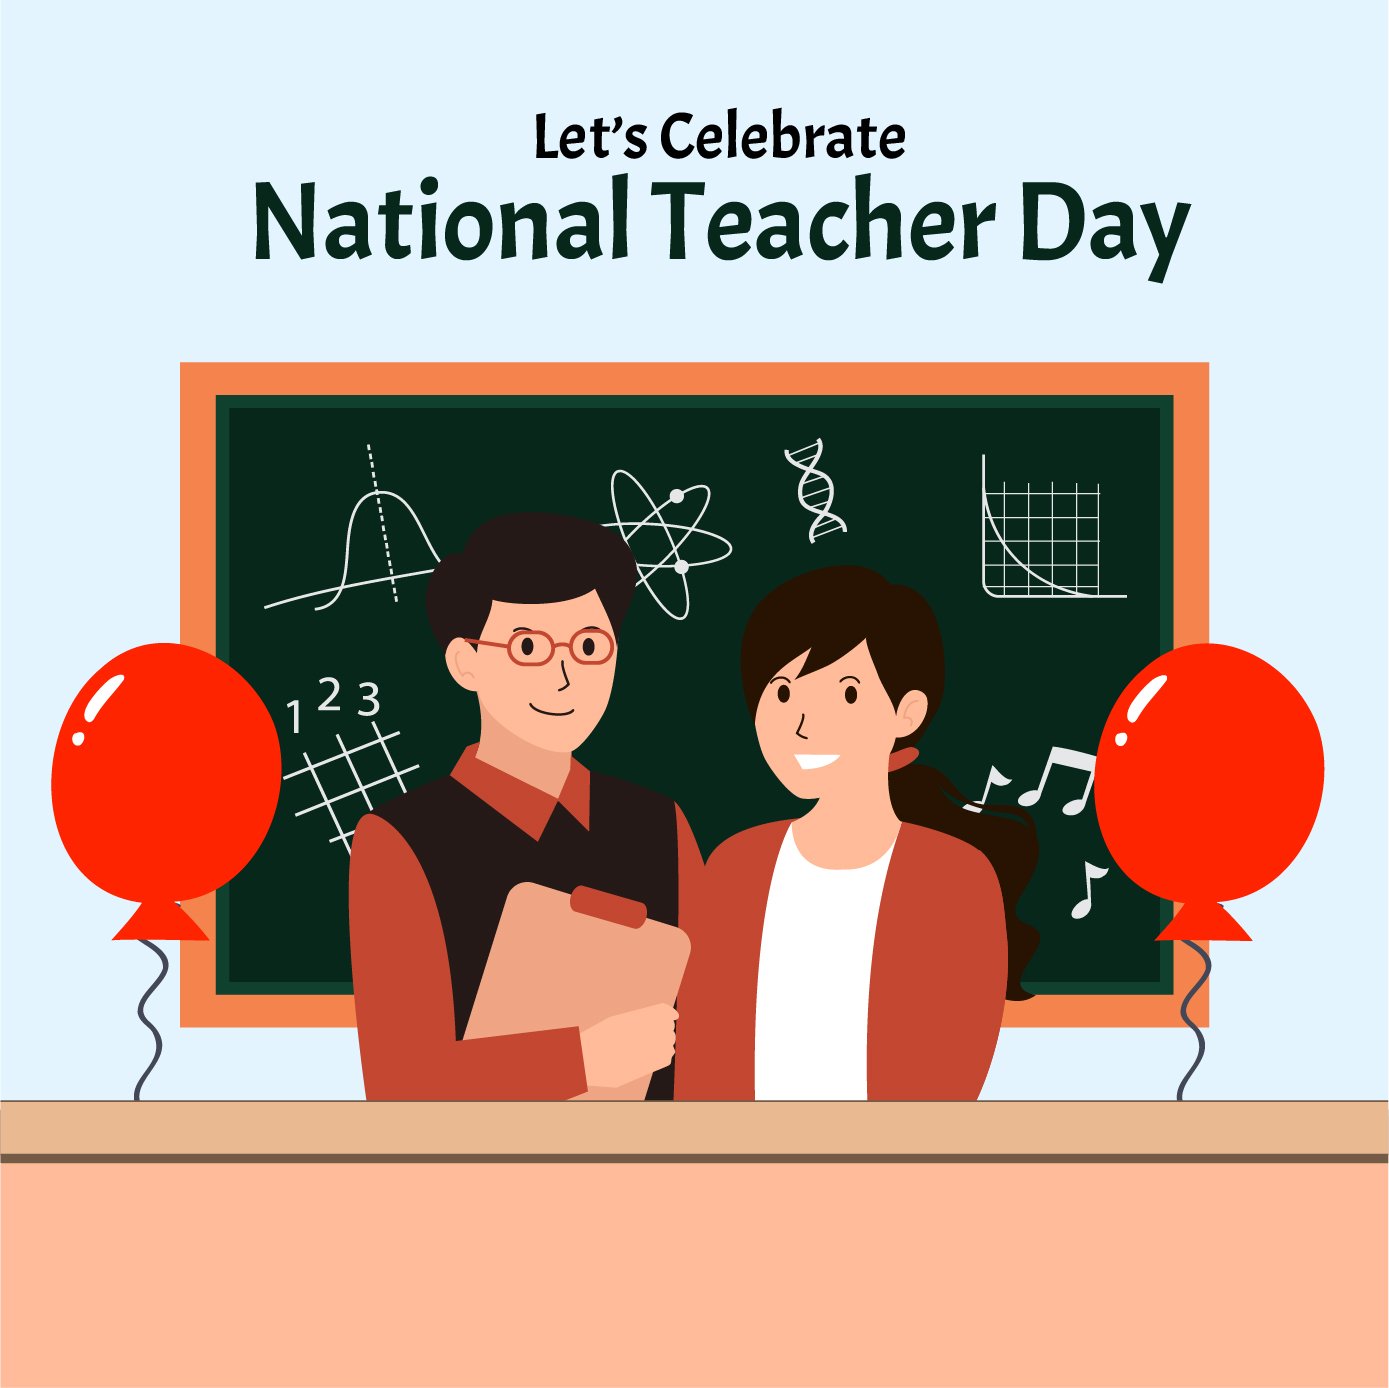 Free National Teacher Day Celebration Vector in Illustrator, PSD, EPS, SVG, JPG, PNG